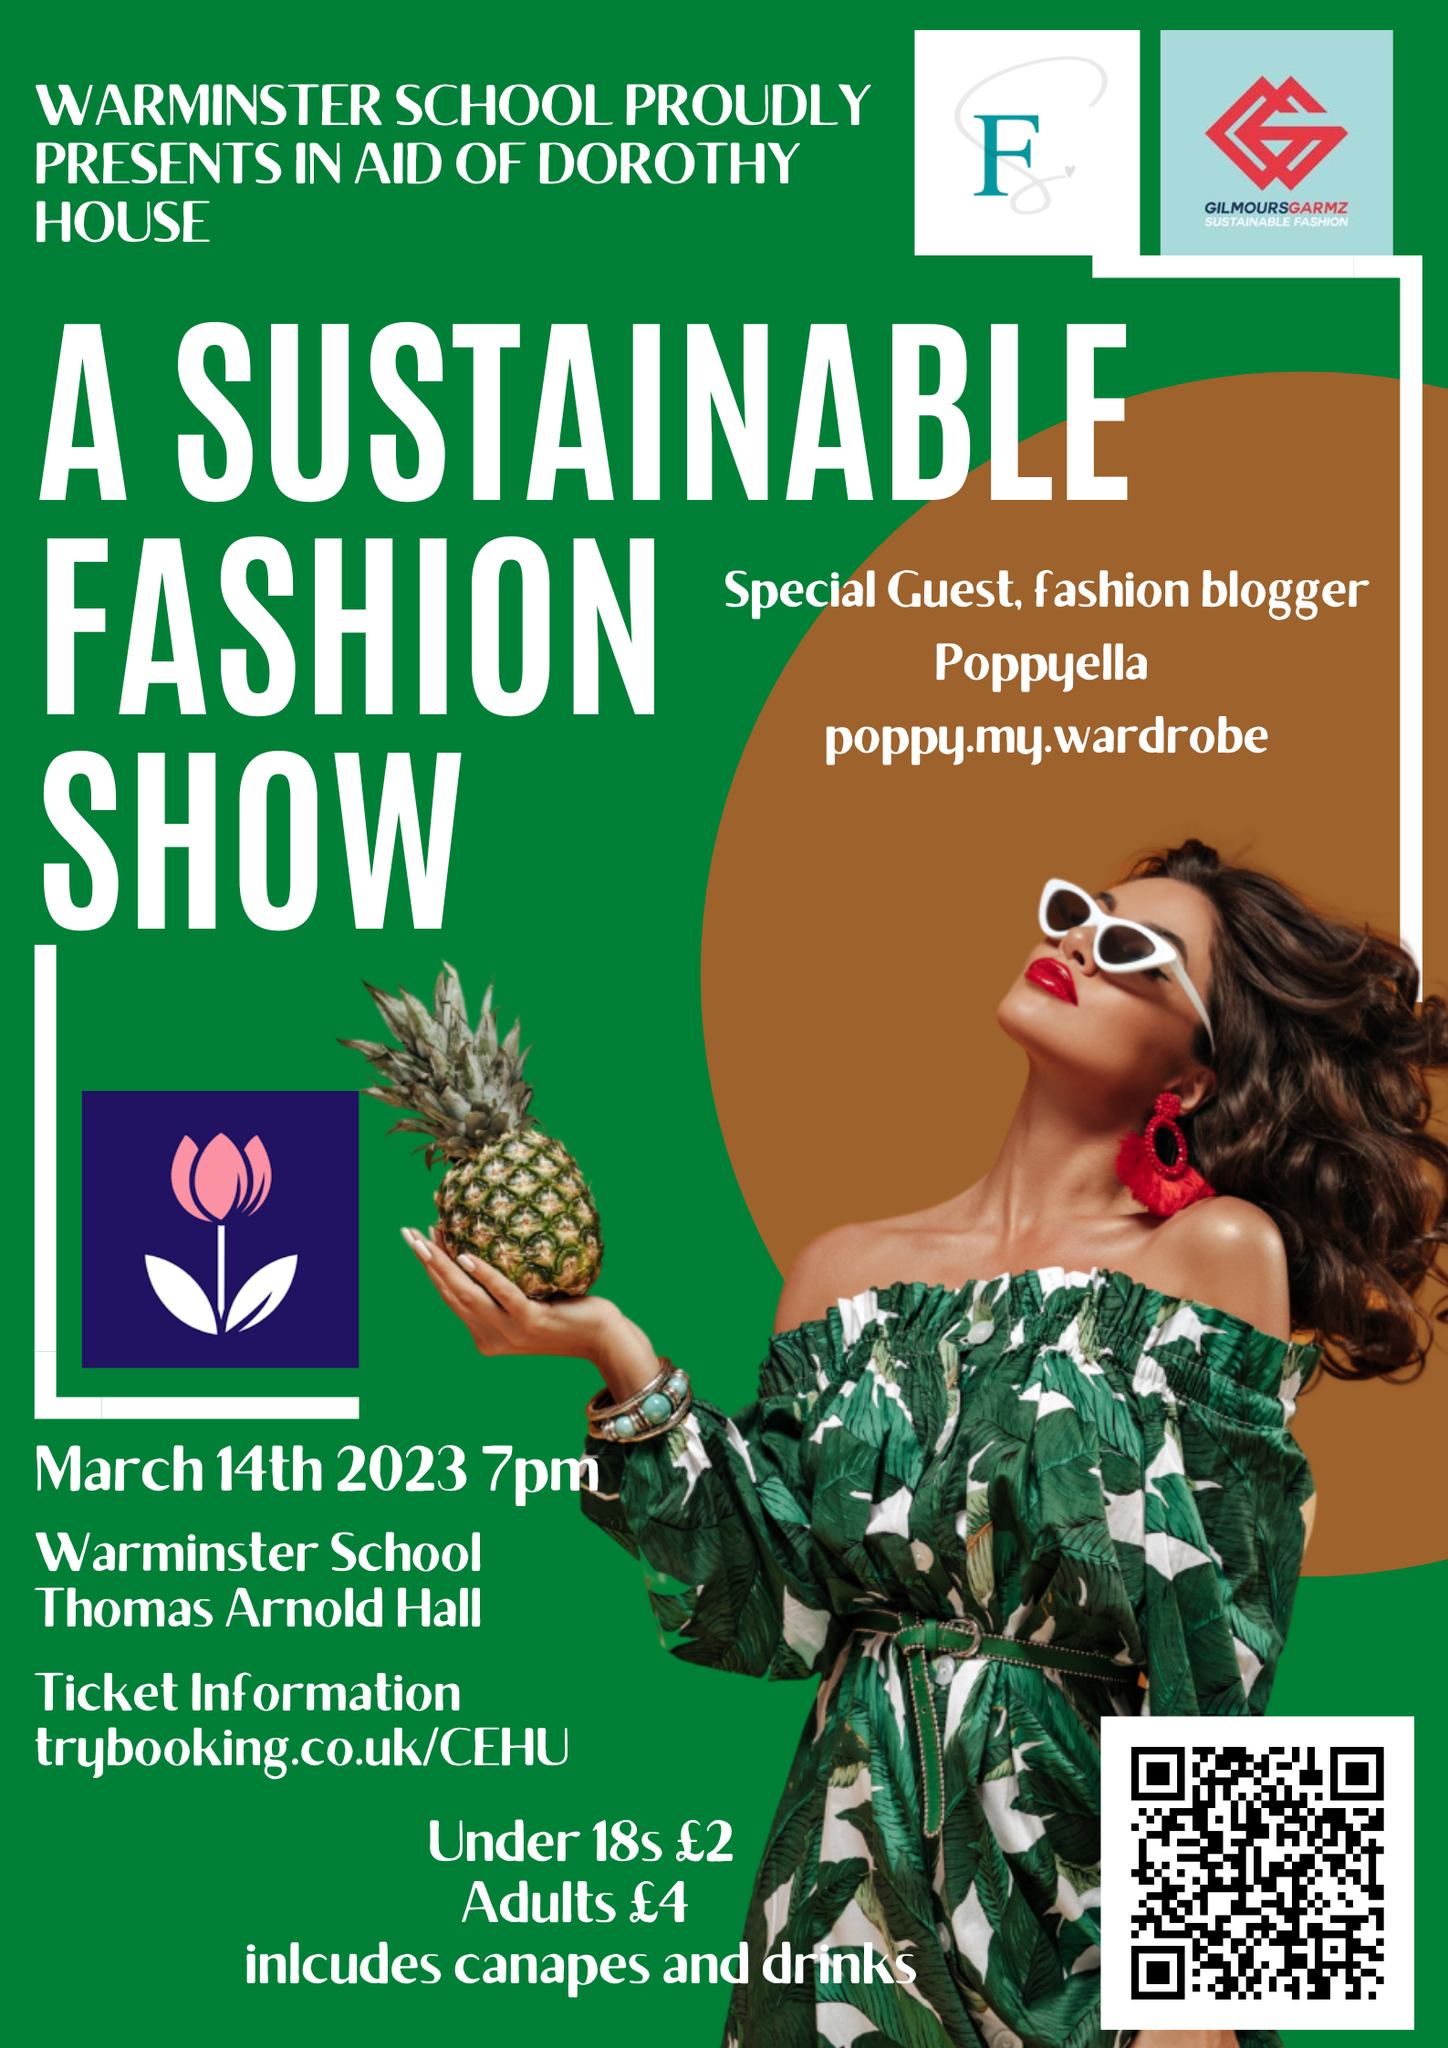 Sustainable Fashion Show